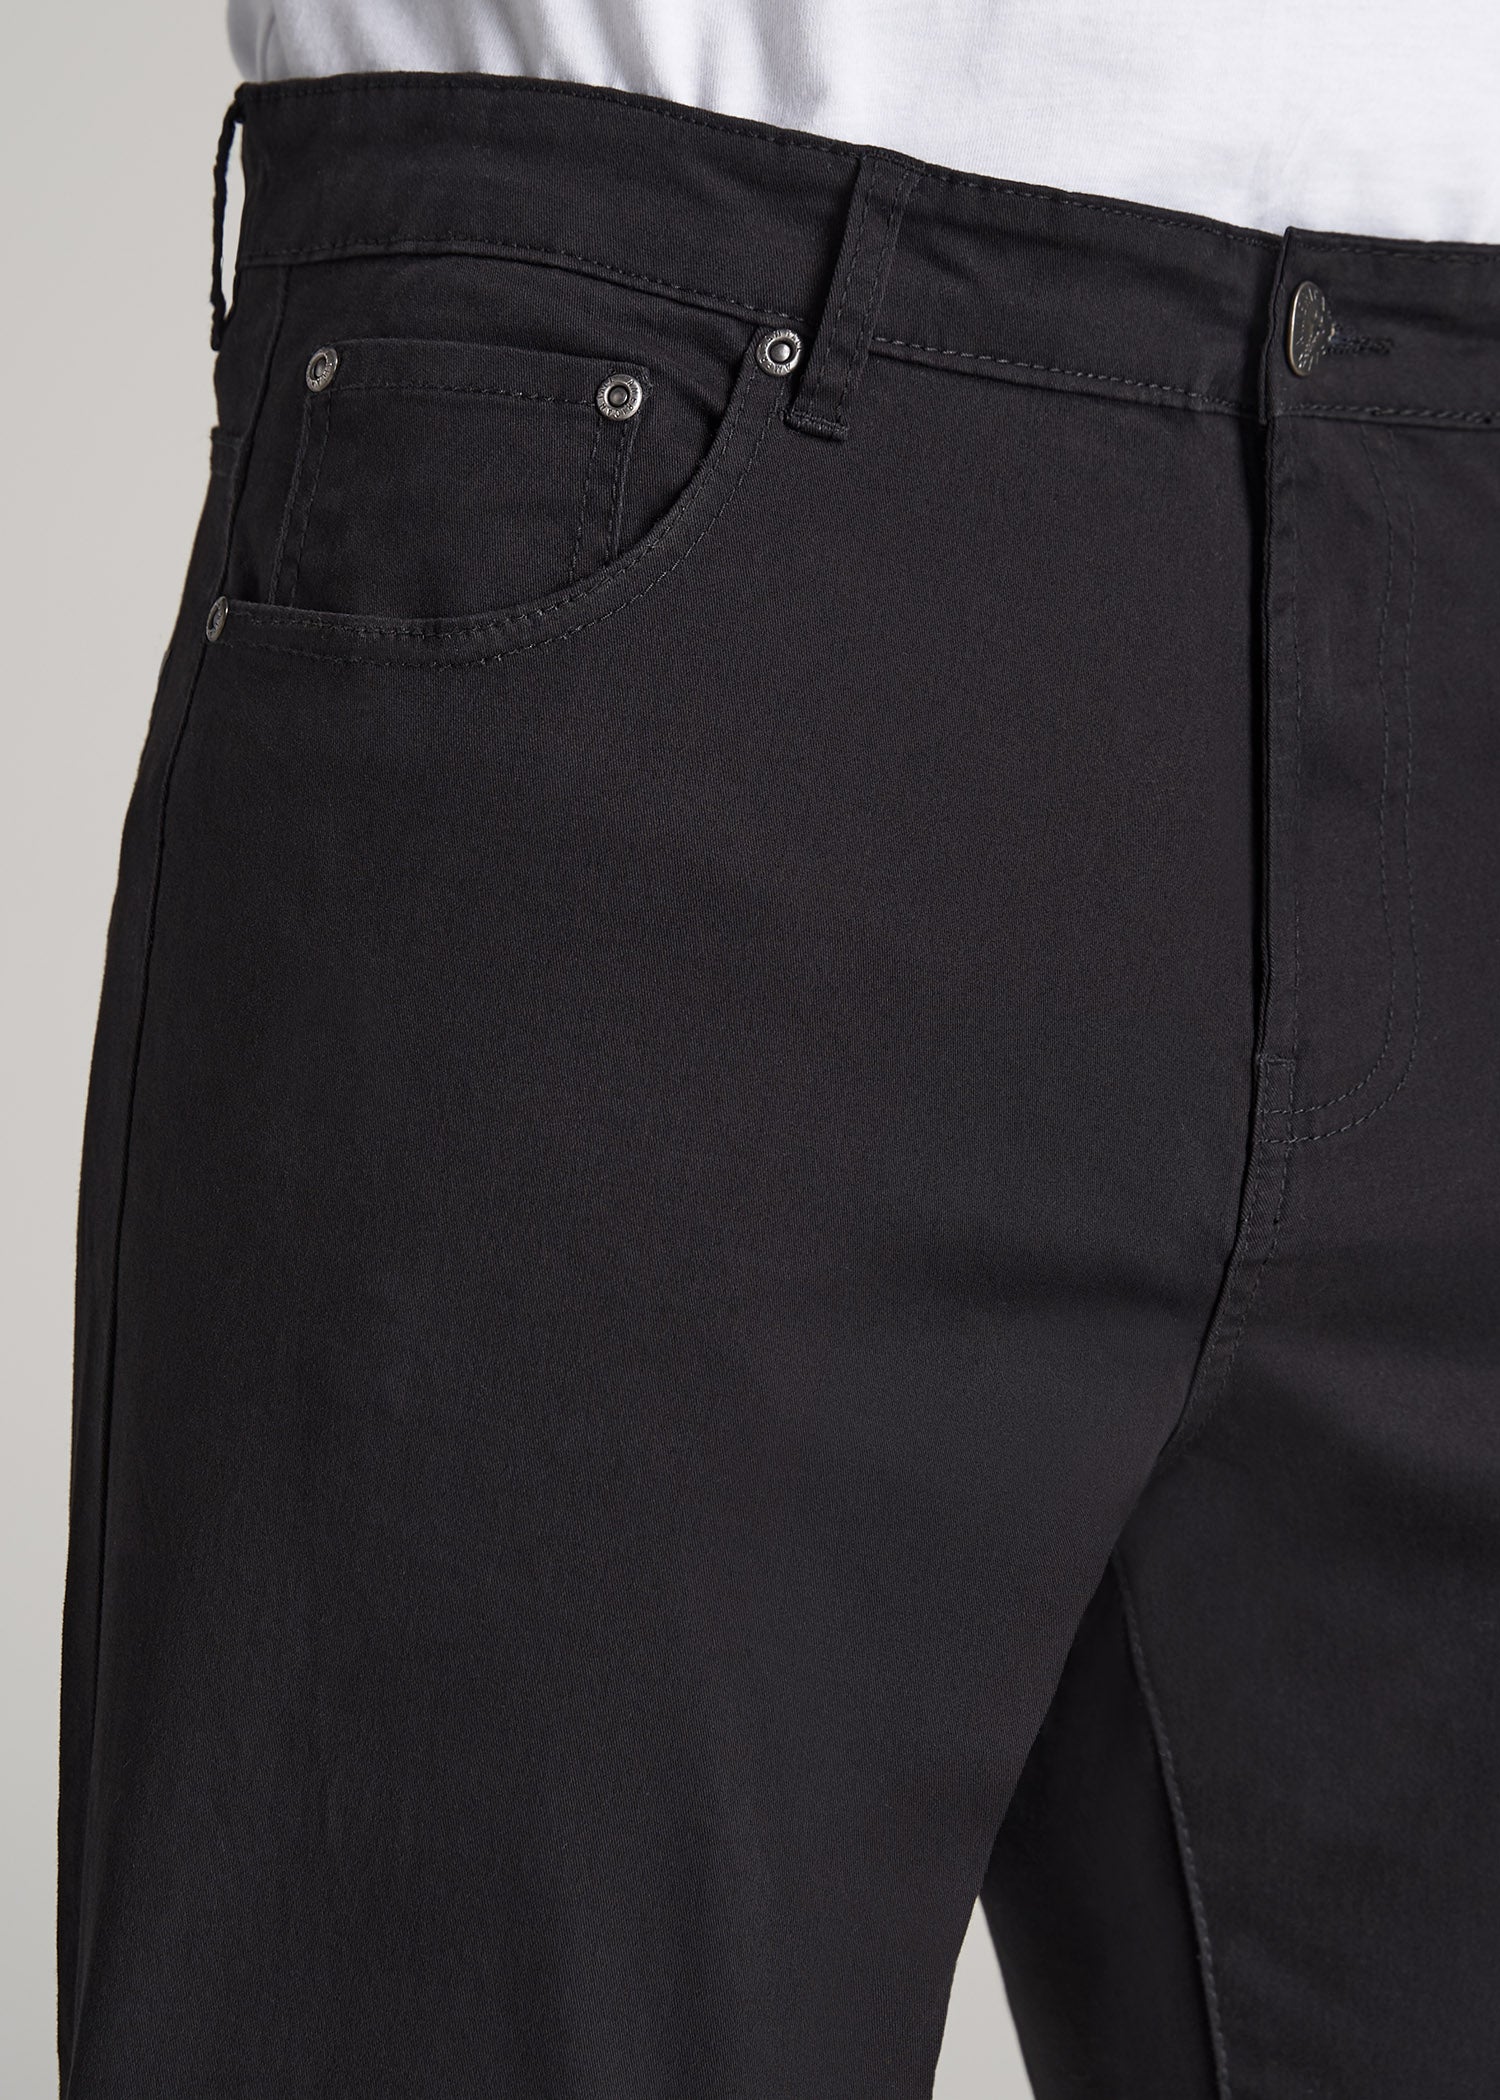 J1 Straight Leg Five-Pocket Pants For Tall Men Black | American Tall